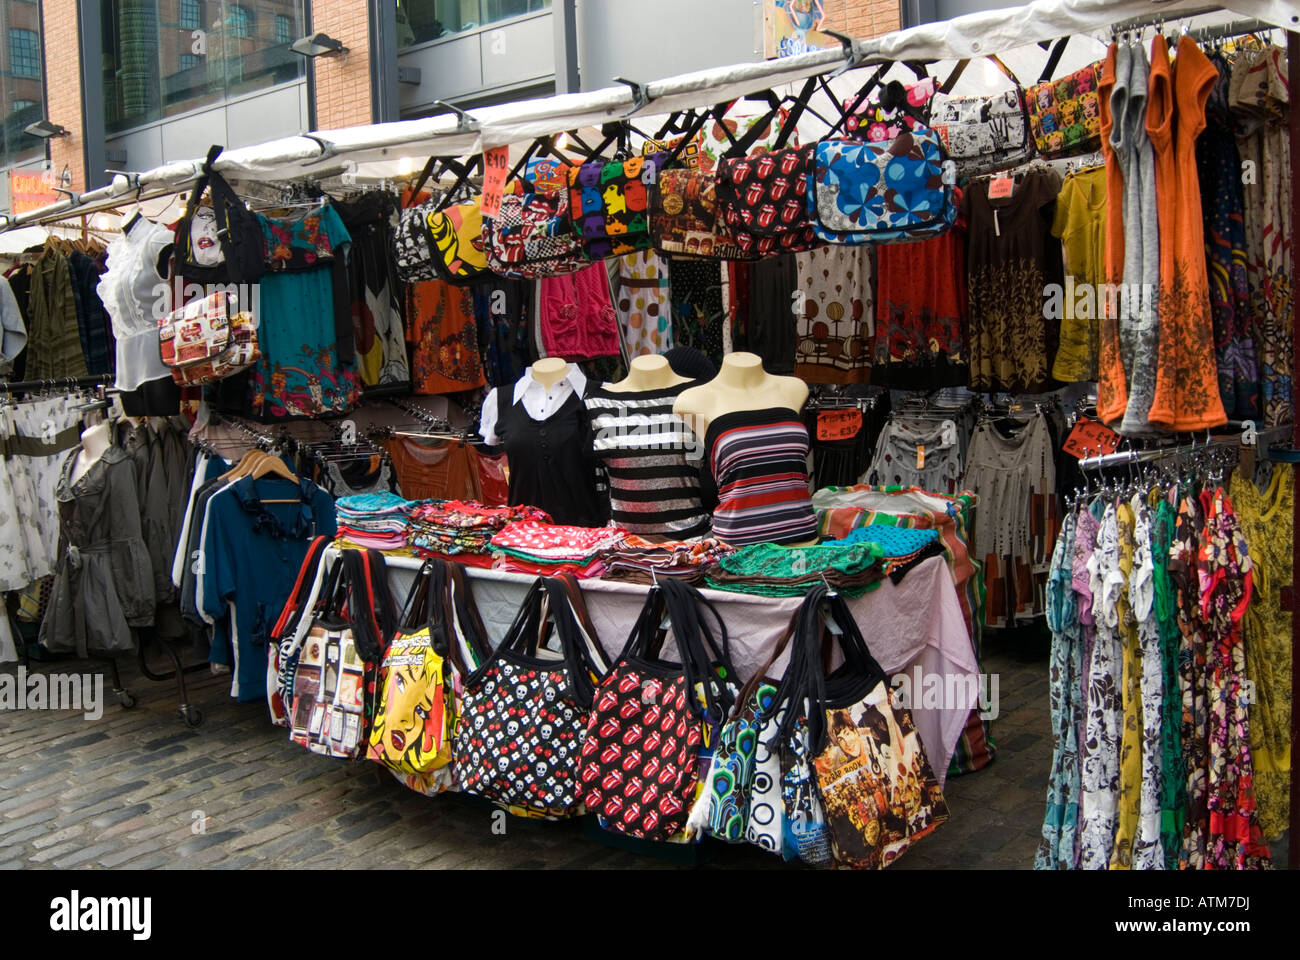 Clothes stall at Camden Market London England UK Stock Photo